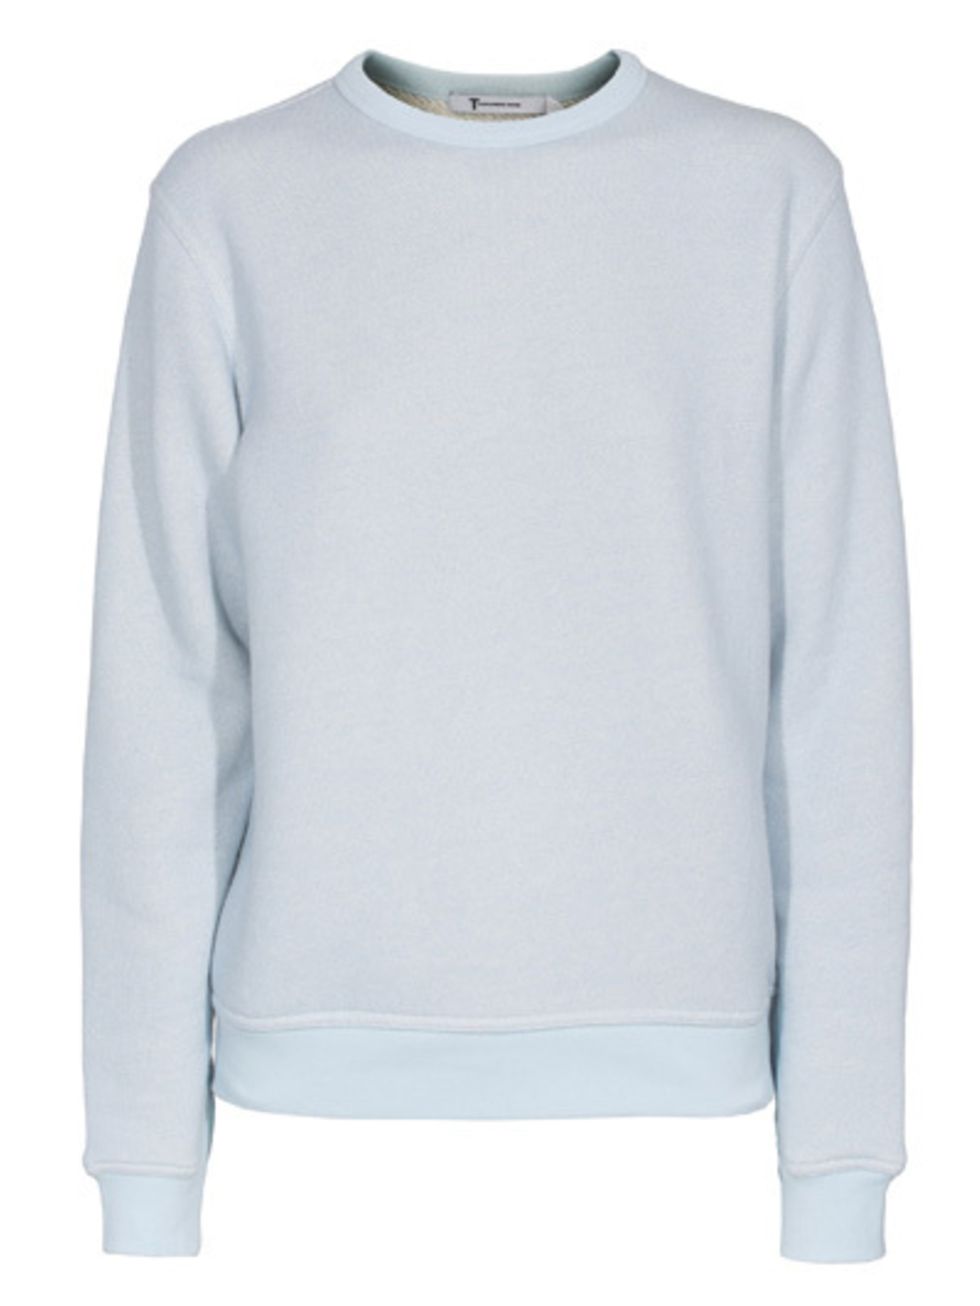 Product, Blue, Sleeve, Textile, White, Sweatshirt, Fashion, Sweater, Grey, Teal, 